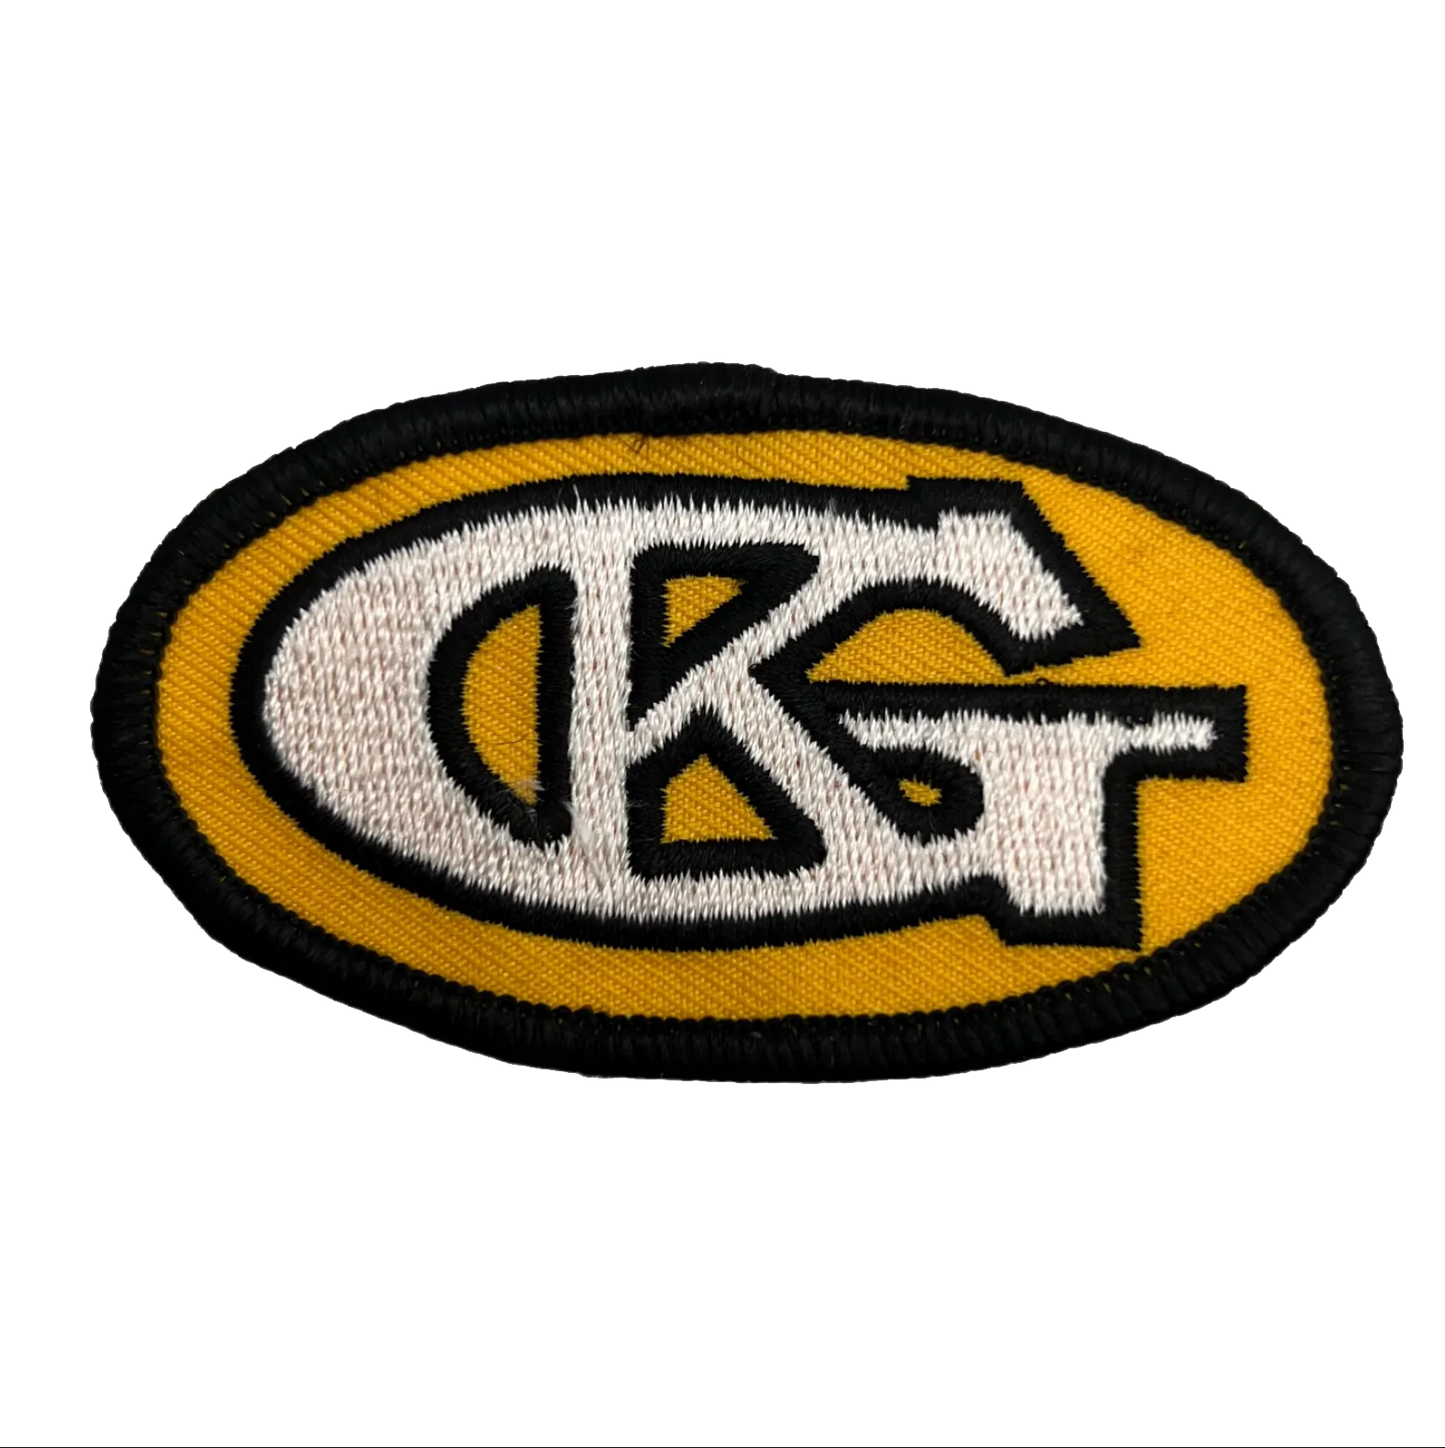 Grind King Skateboard Trucks "GK" 90's Logo Patch